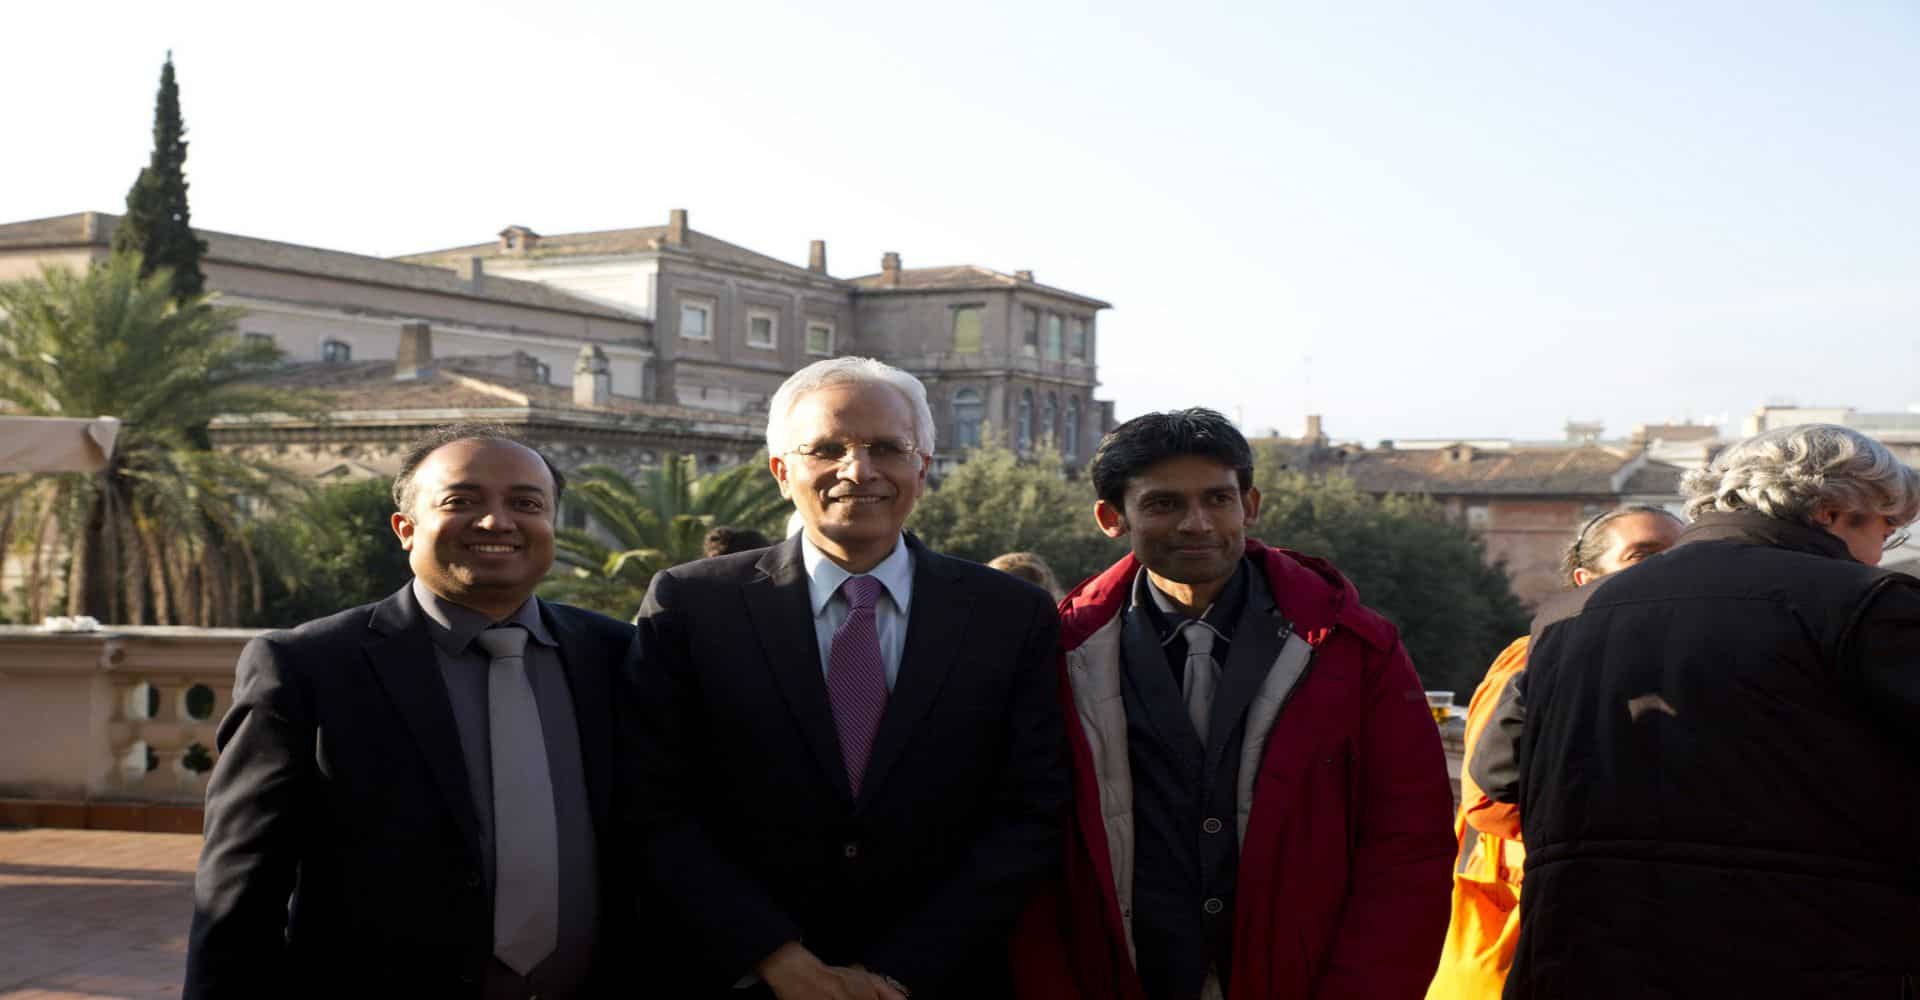 Dipavali all'Ambasciata dell'India a Roma